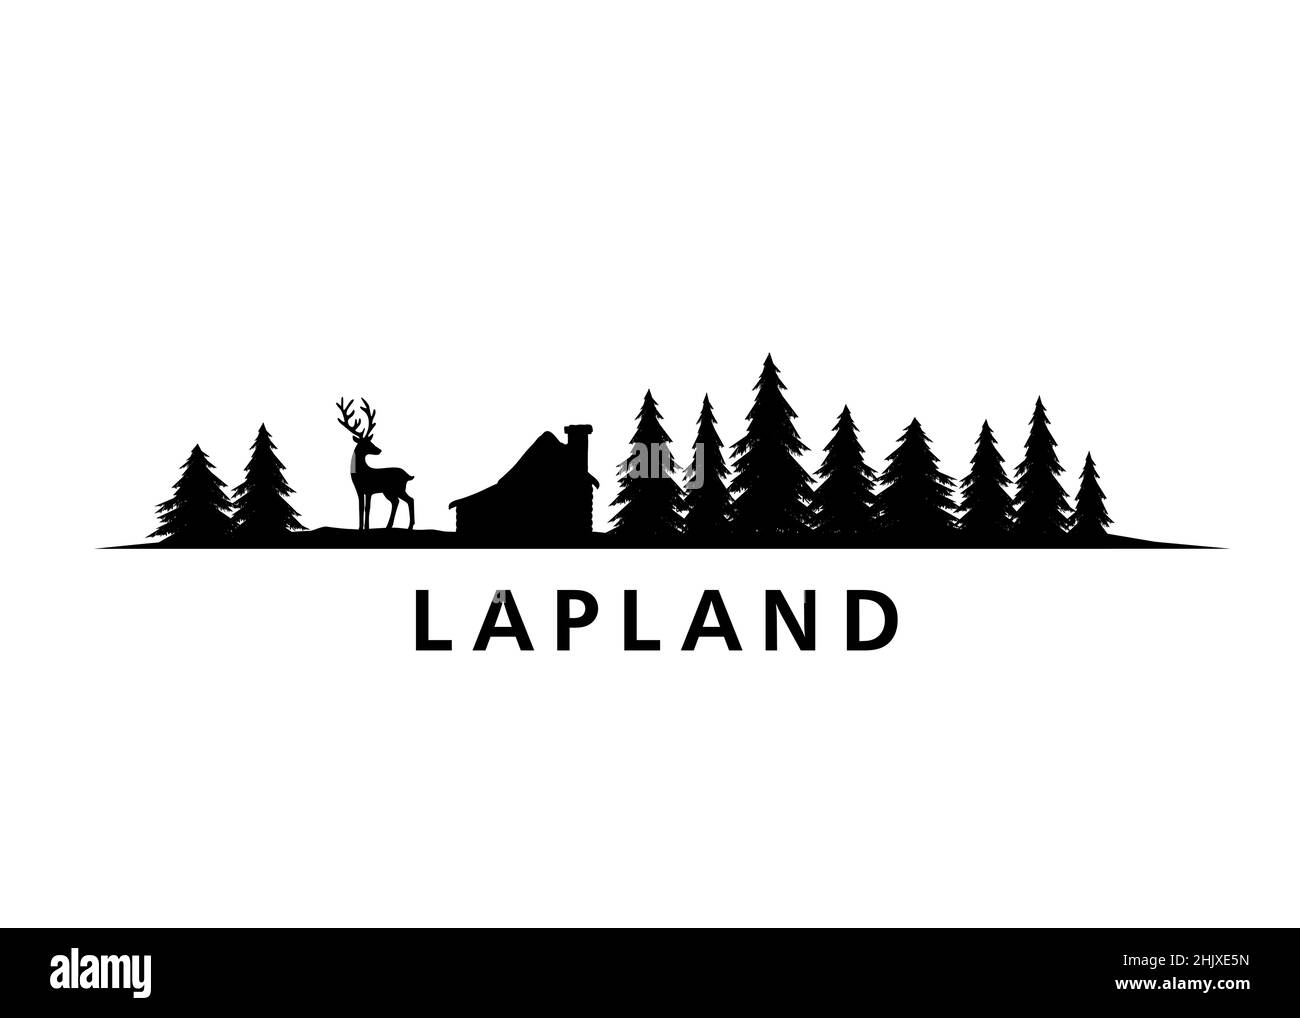 Lapland Landscape Black Vector Graphic Stock Vector